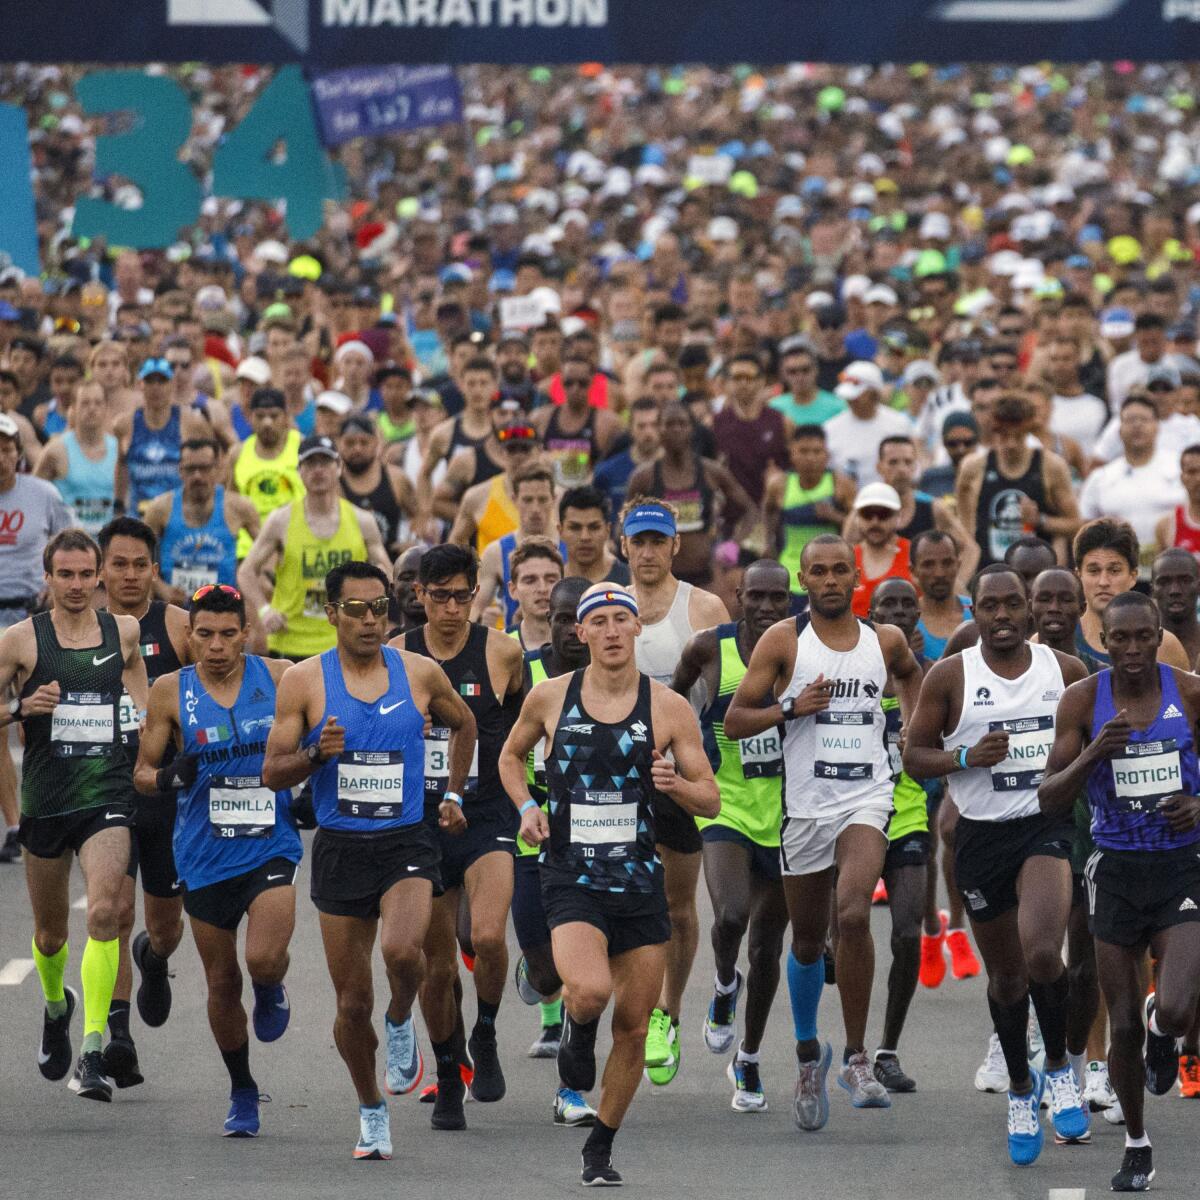 A crowd of marathon runners.